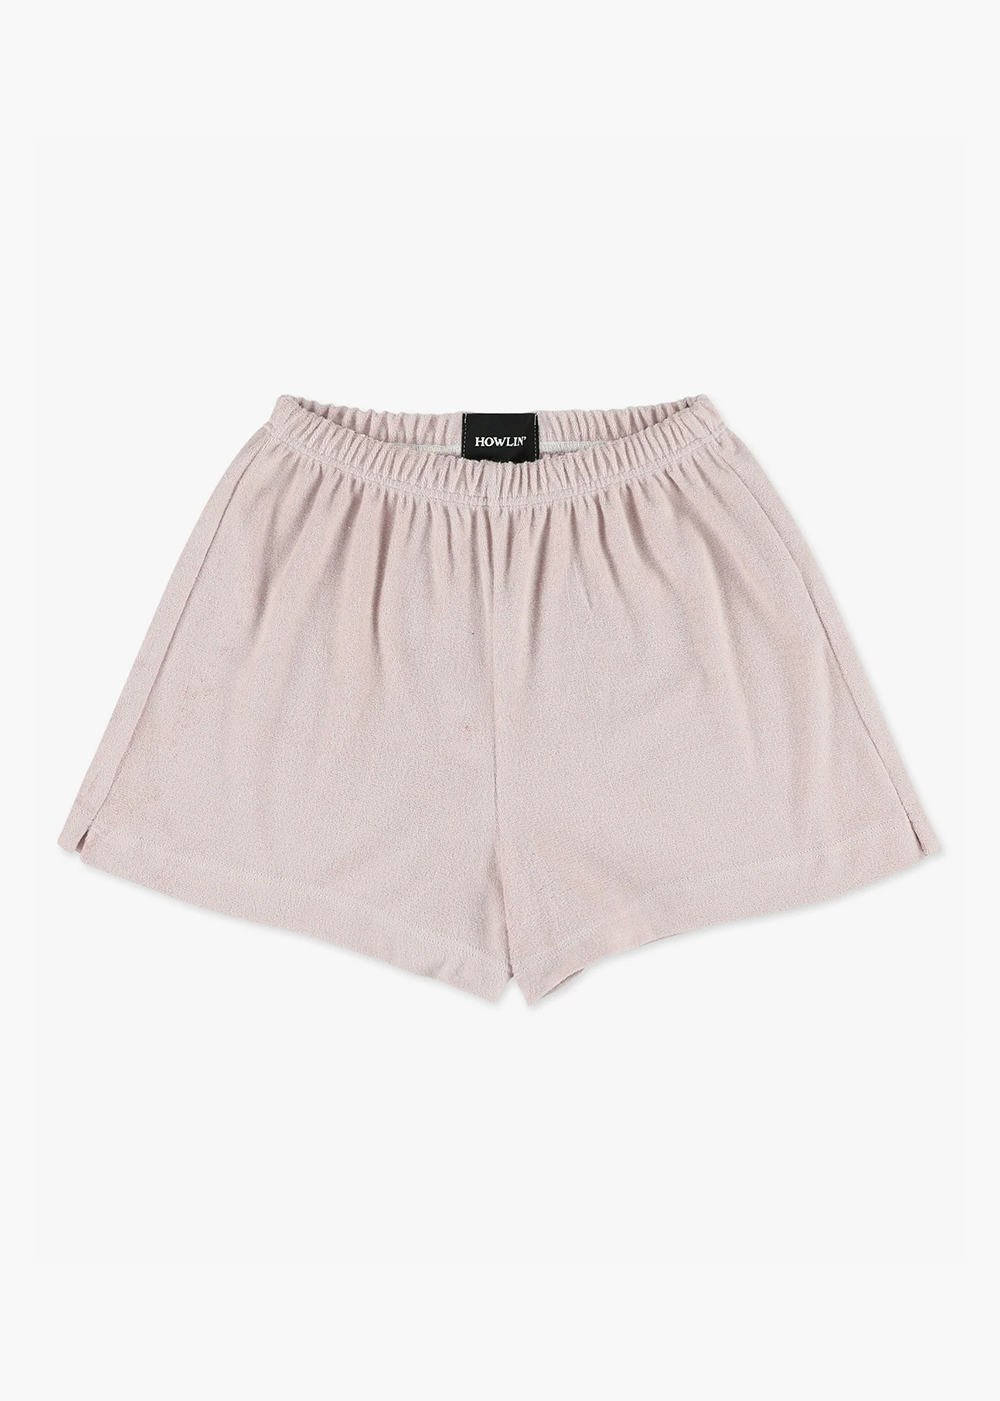 Wonder Shorts - Coud Pink - Howlin' Knitwear - Danali - Canada